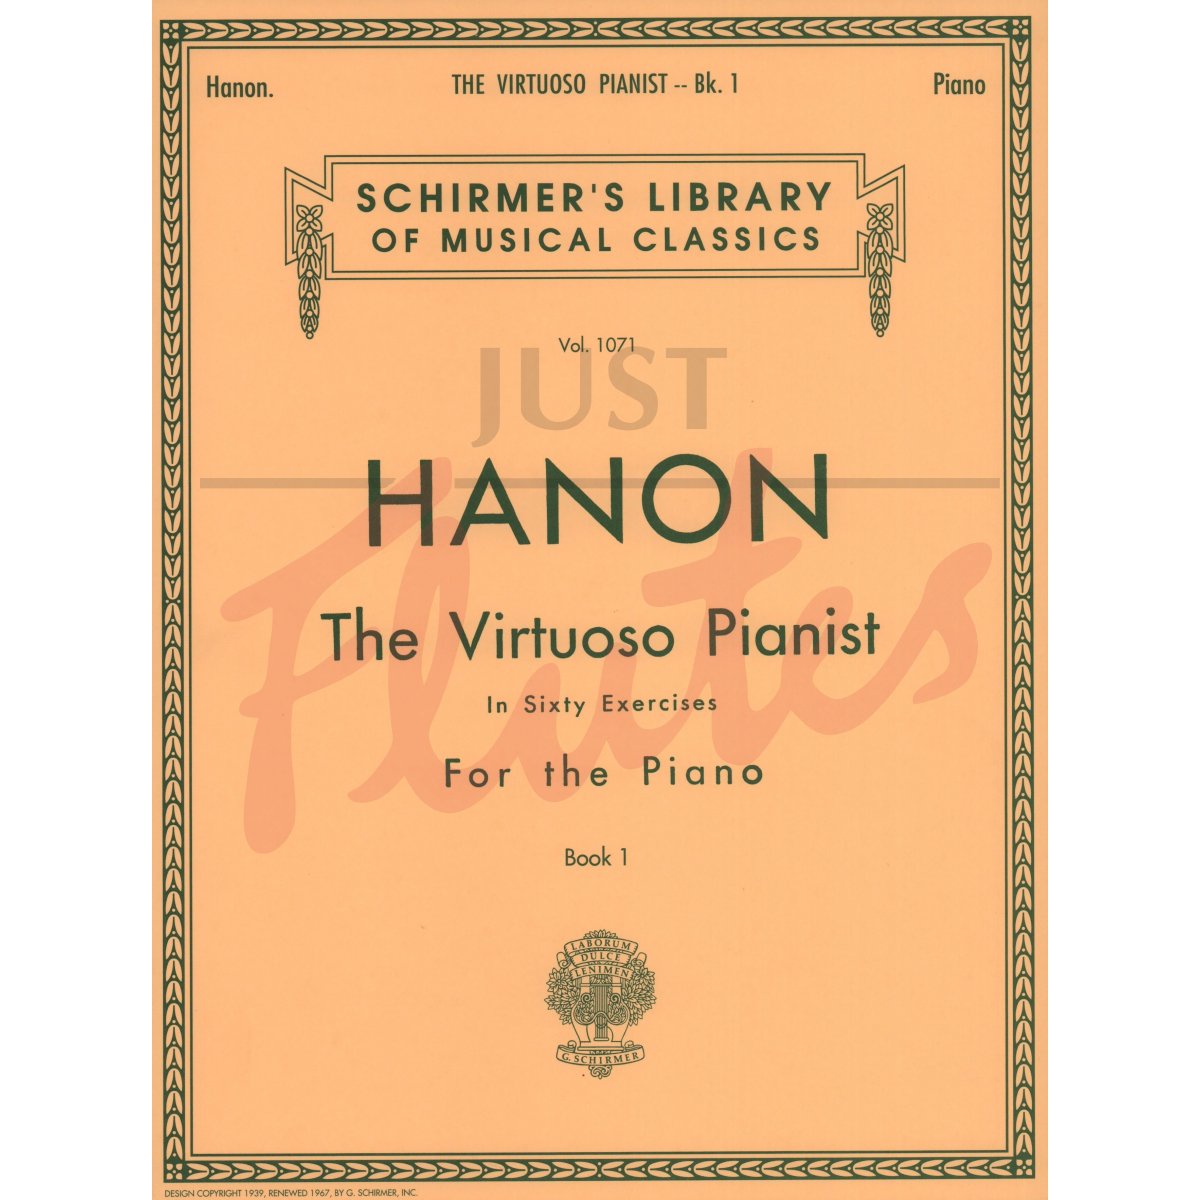 The Virtuoso Pianist Book I